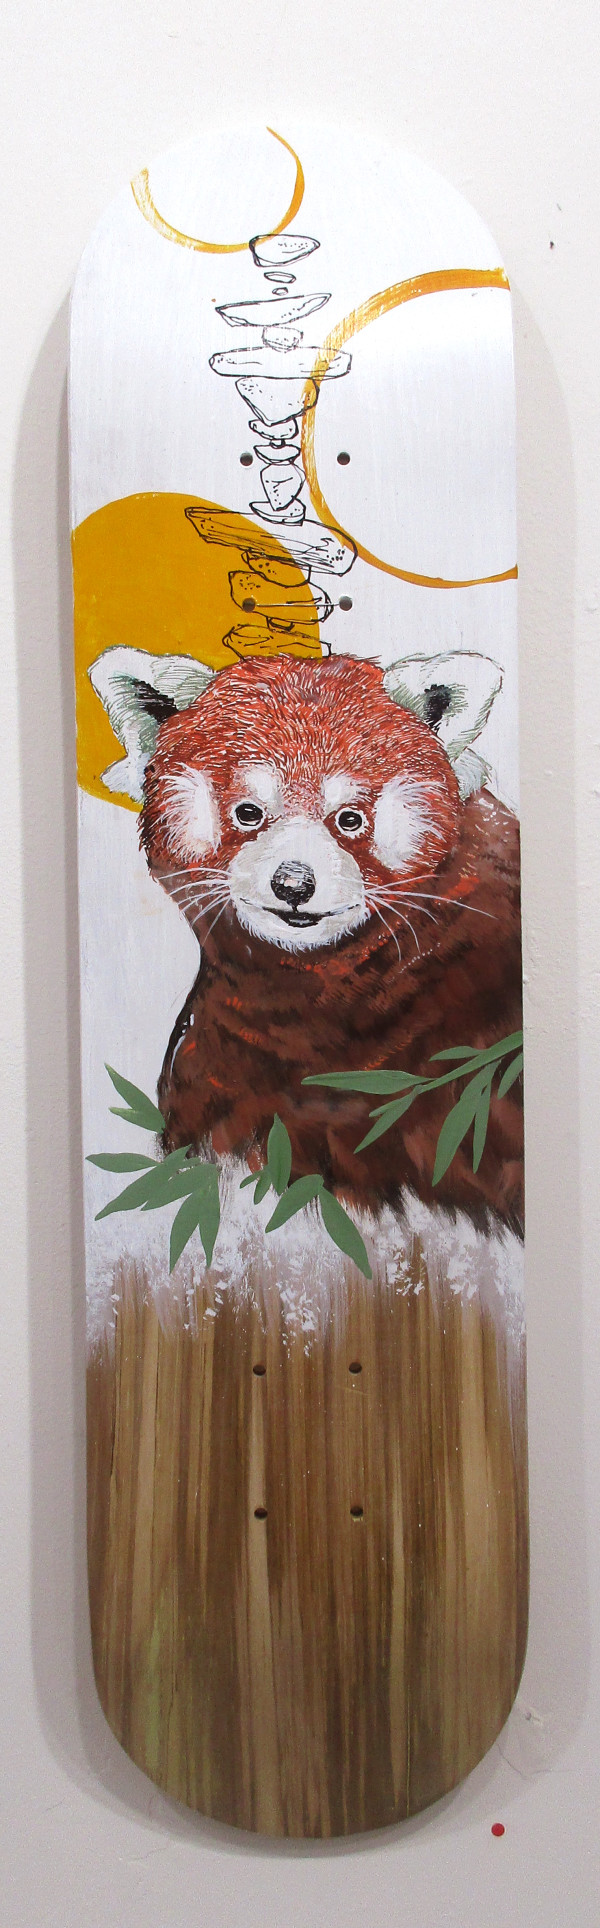 Red Panda Skate Deck by Joshua Coffy